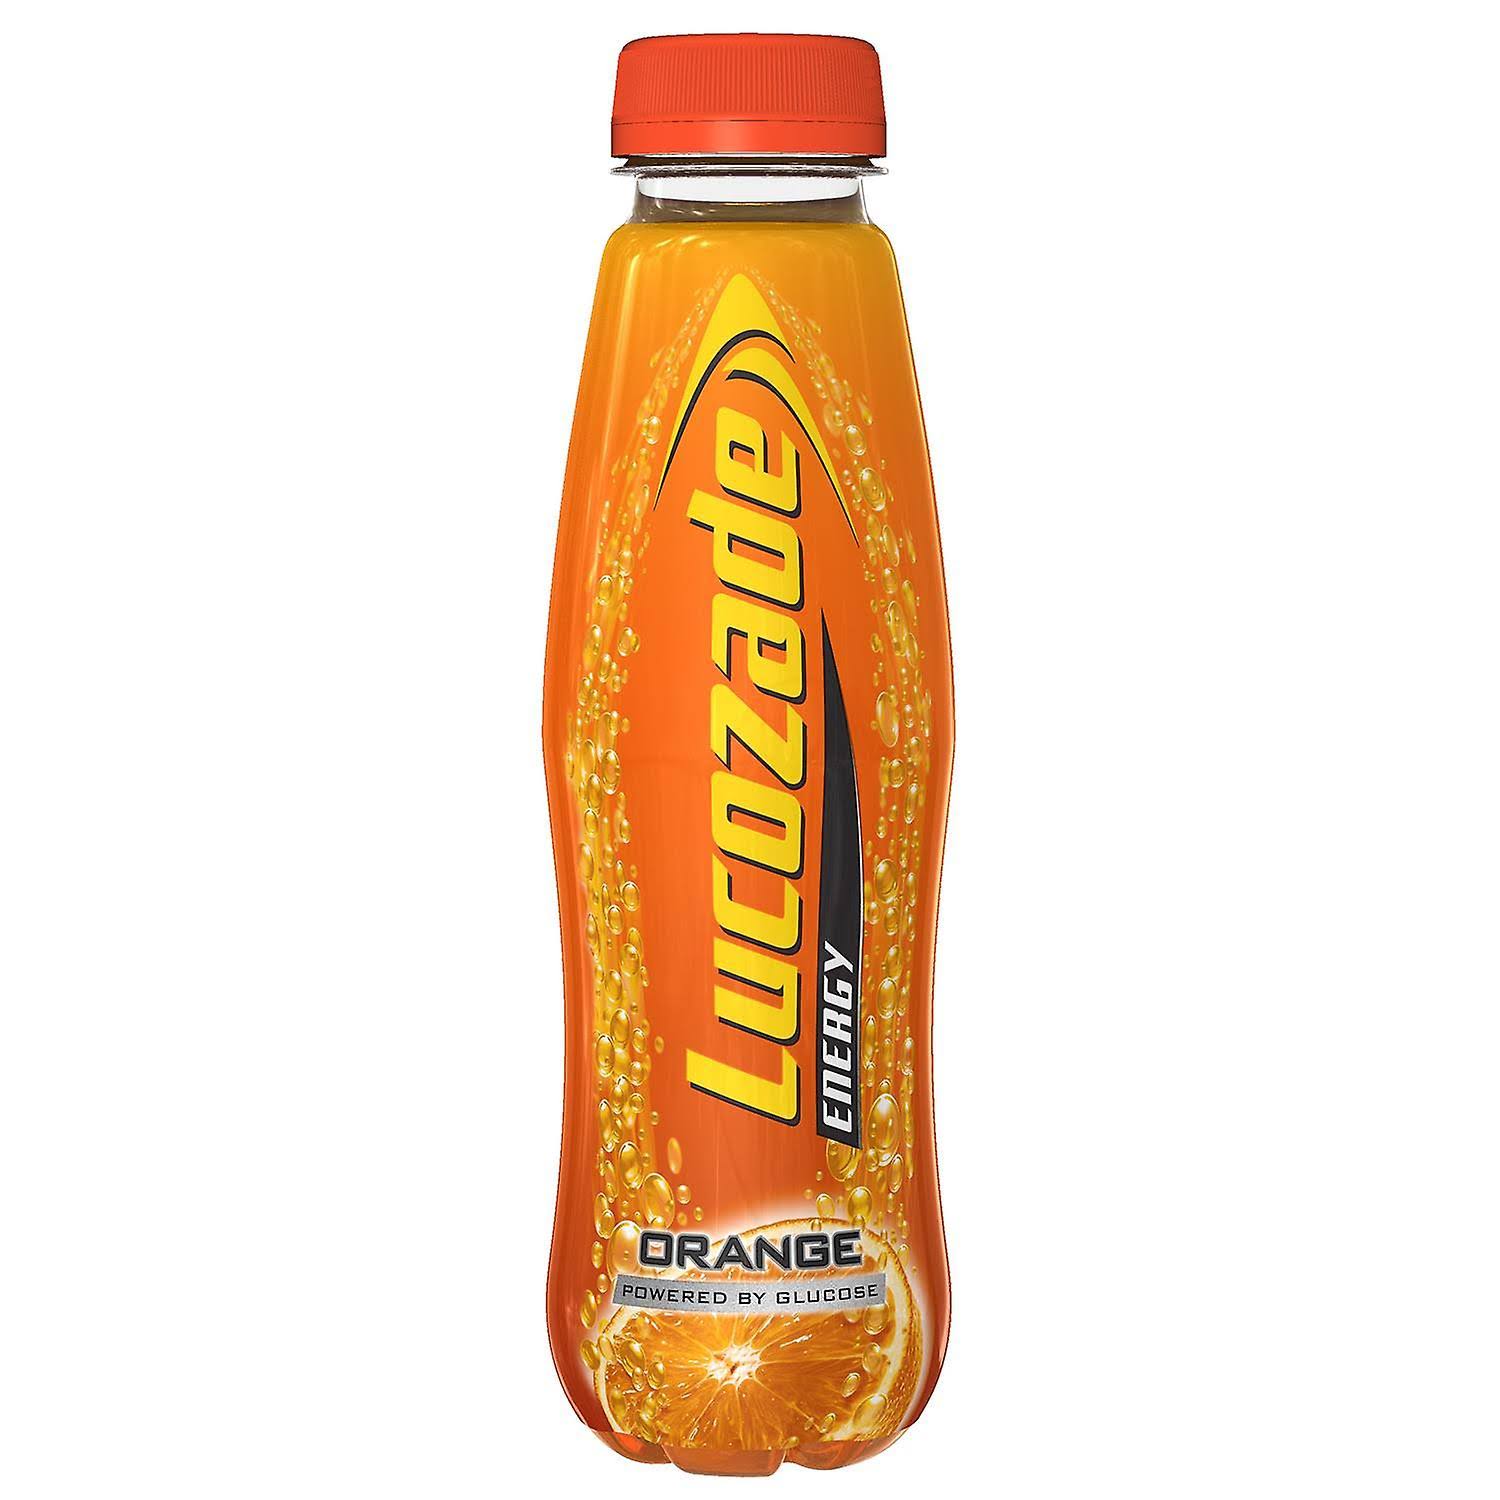 Lucozade Energy Drink - Orange, 380ml